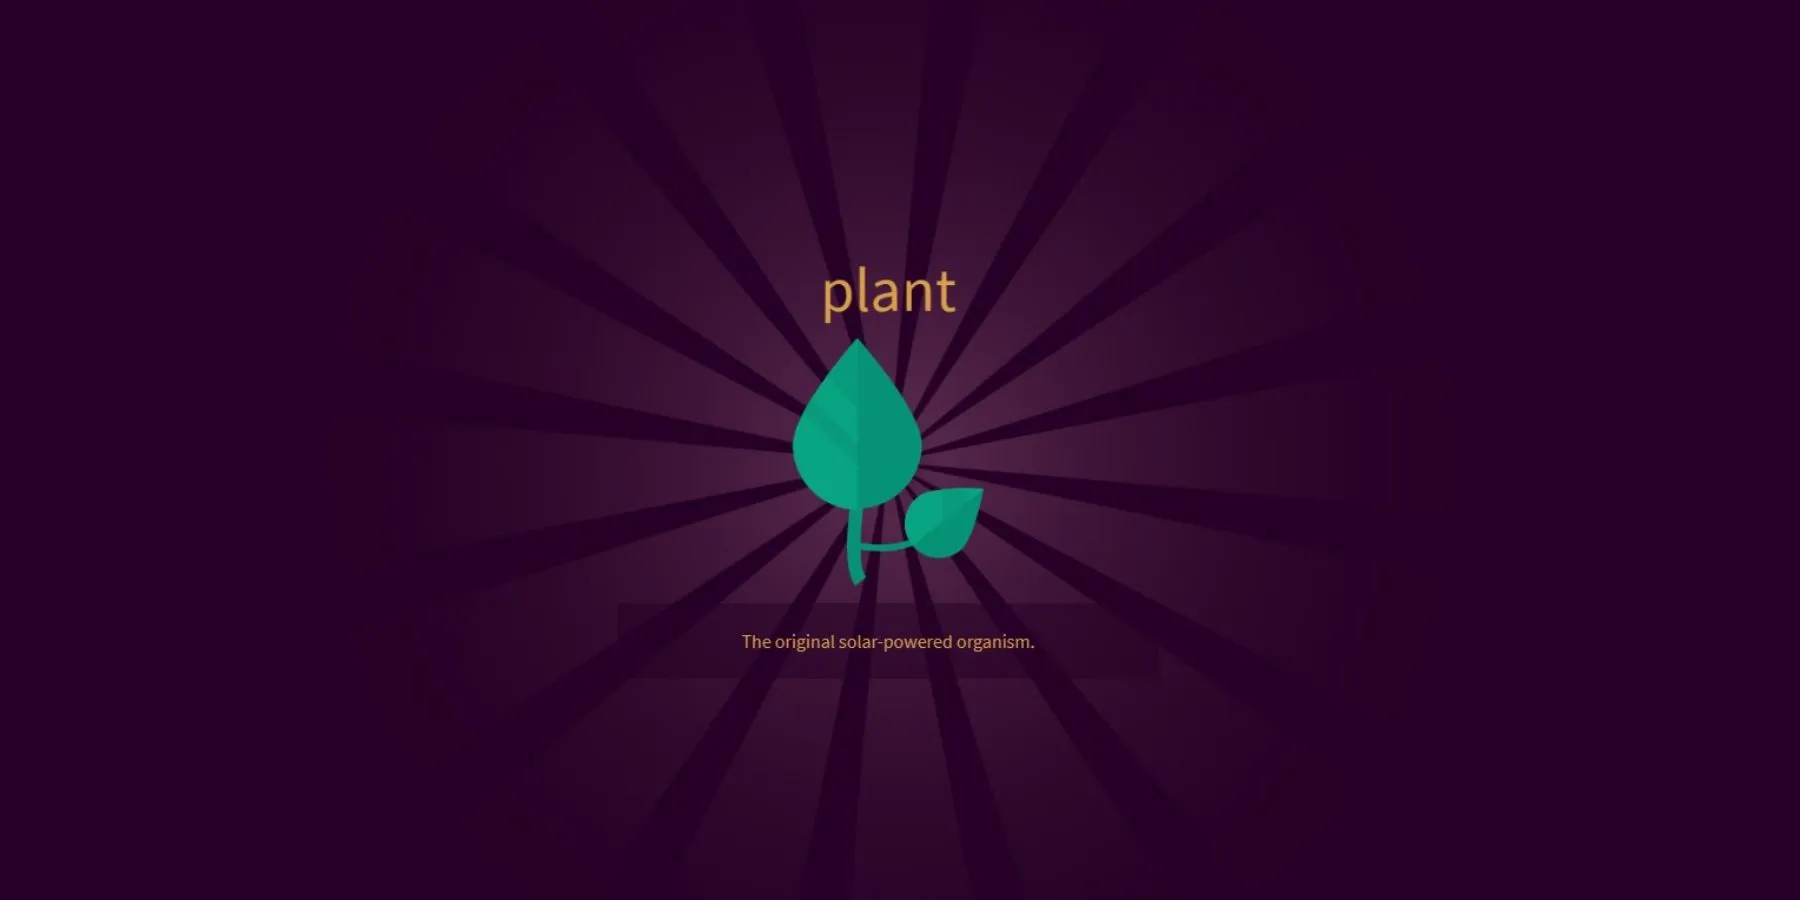 little alchemy 2 plant